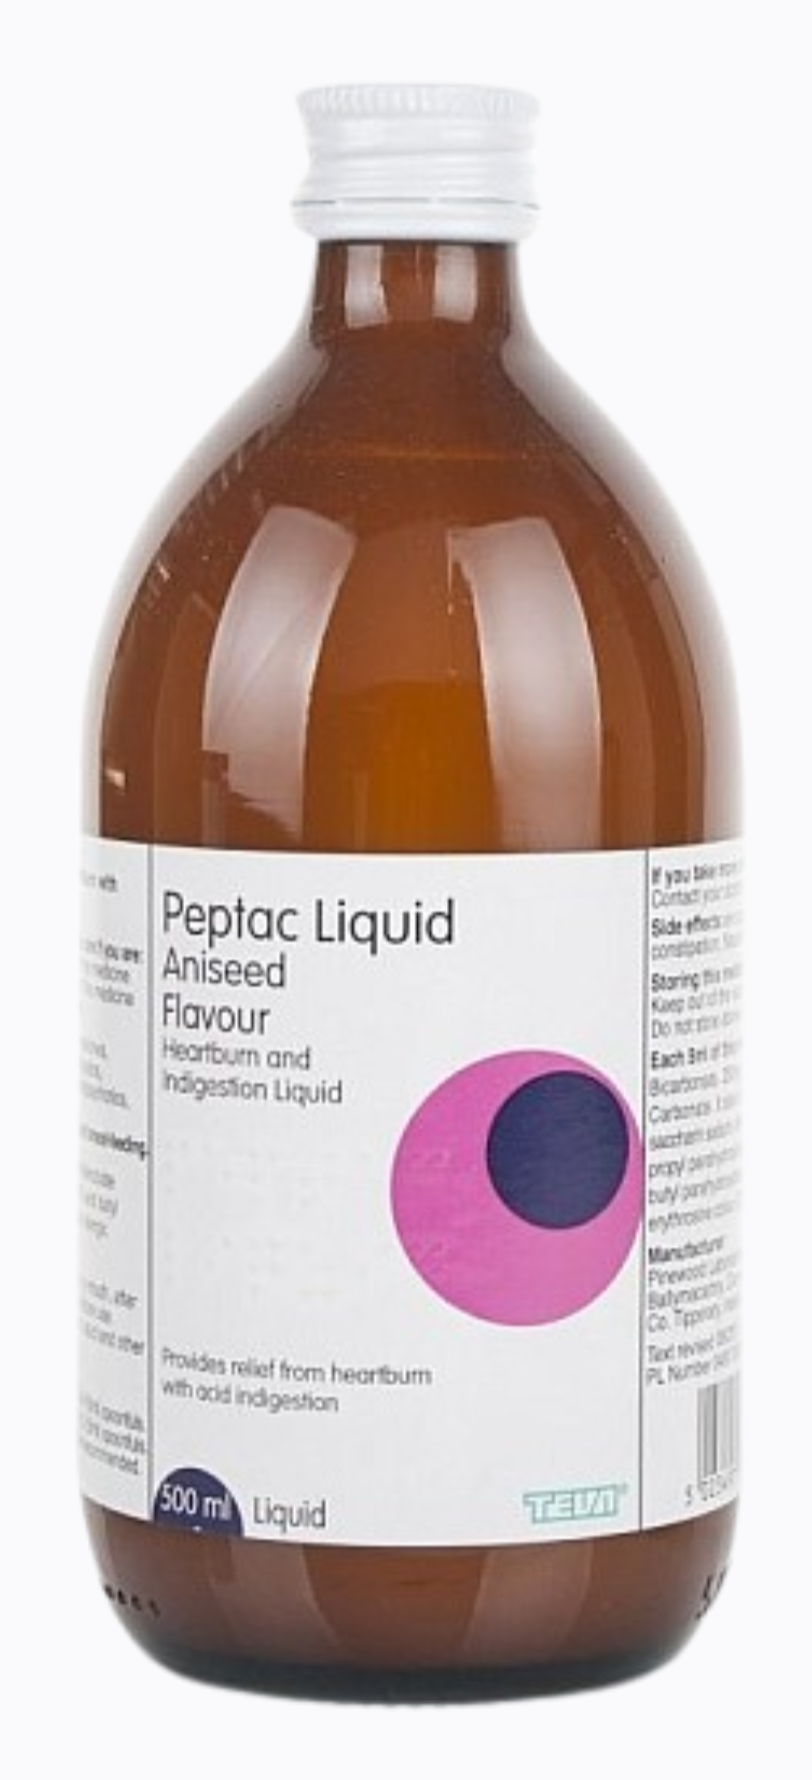 Peptac Original Aniseed Flavour Liquid - 500ml